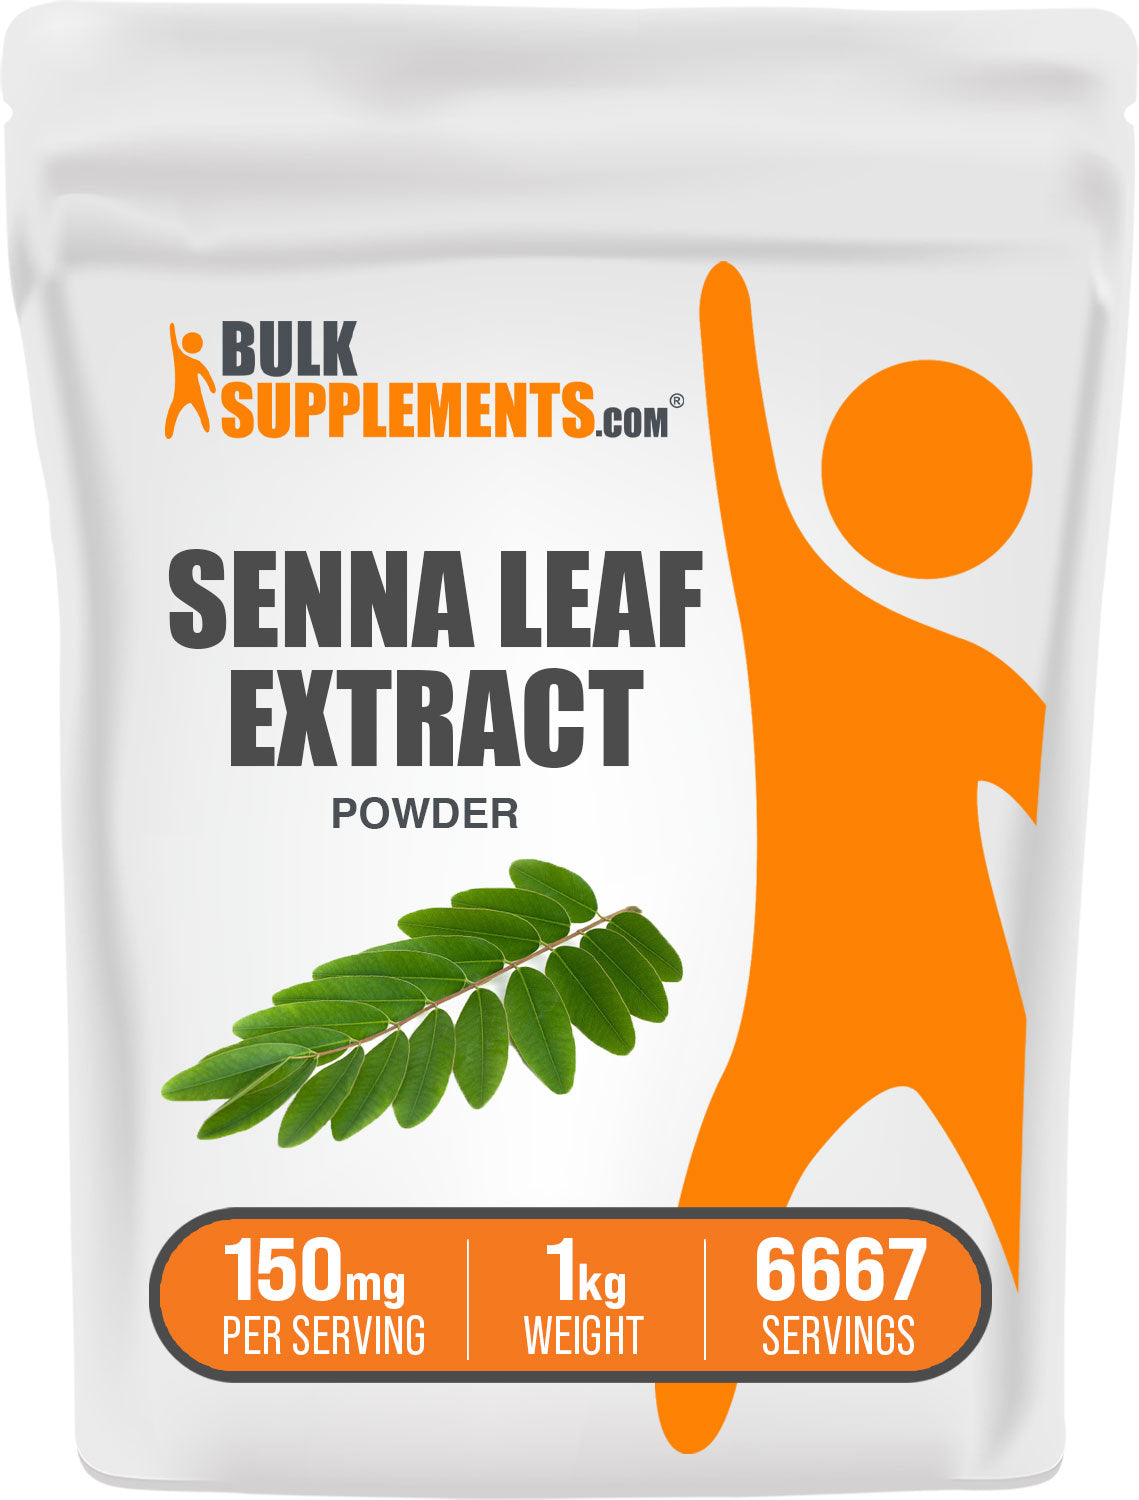 Senna Leaf Extract 1kg Bag